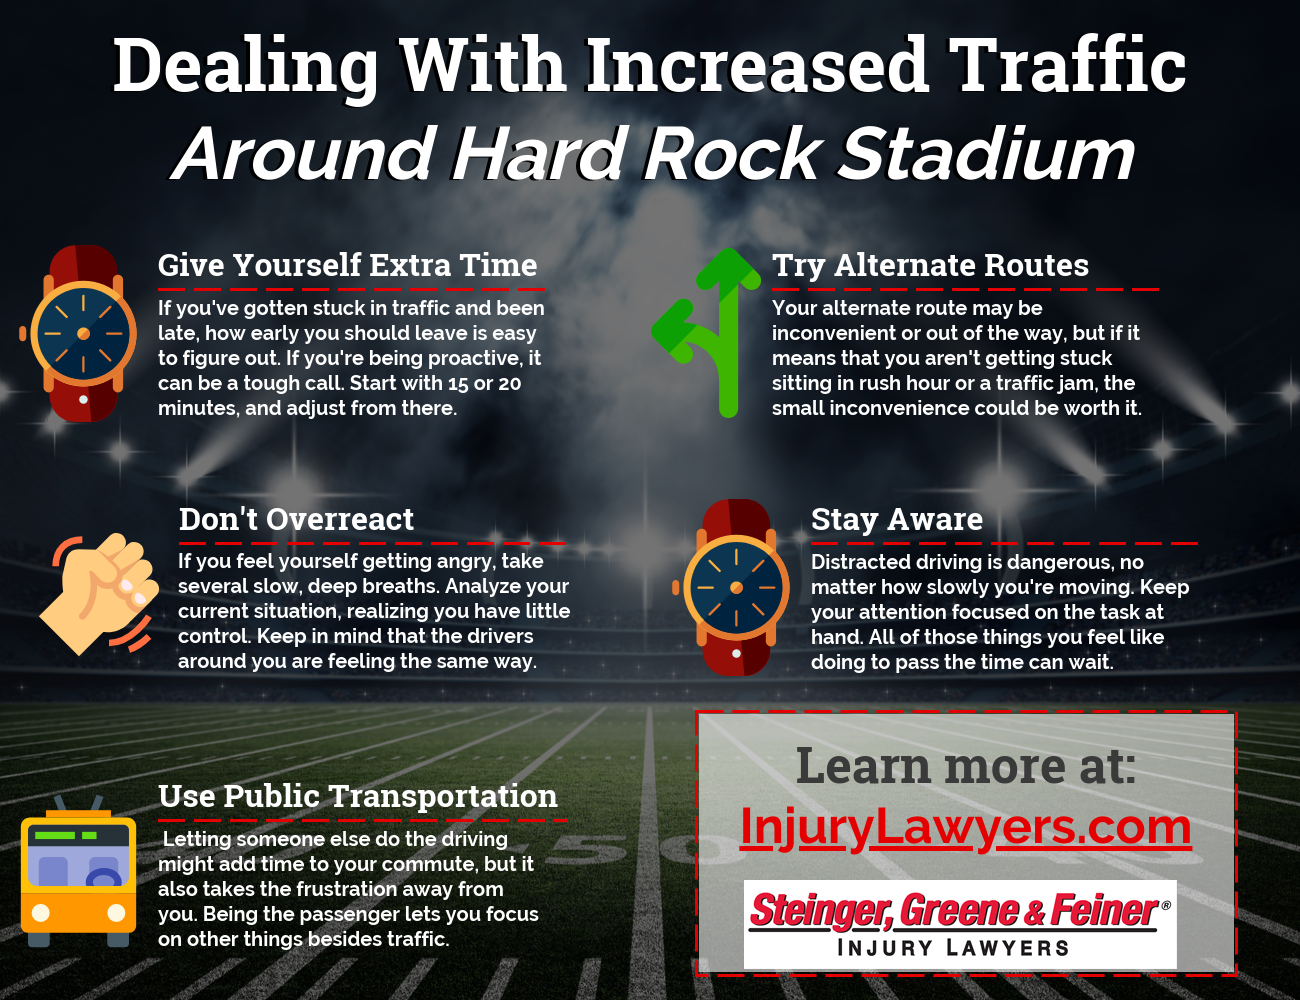 Dealing With Increased Traffic Around Hard Rock Stadium infographic